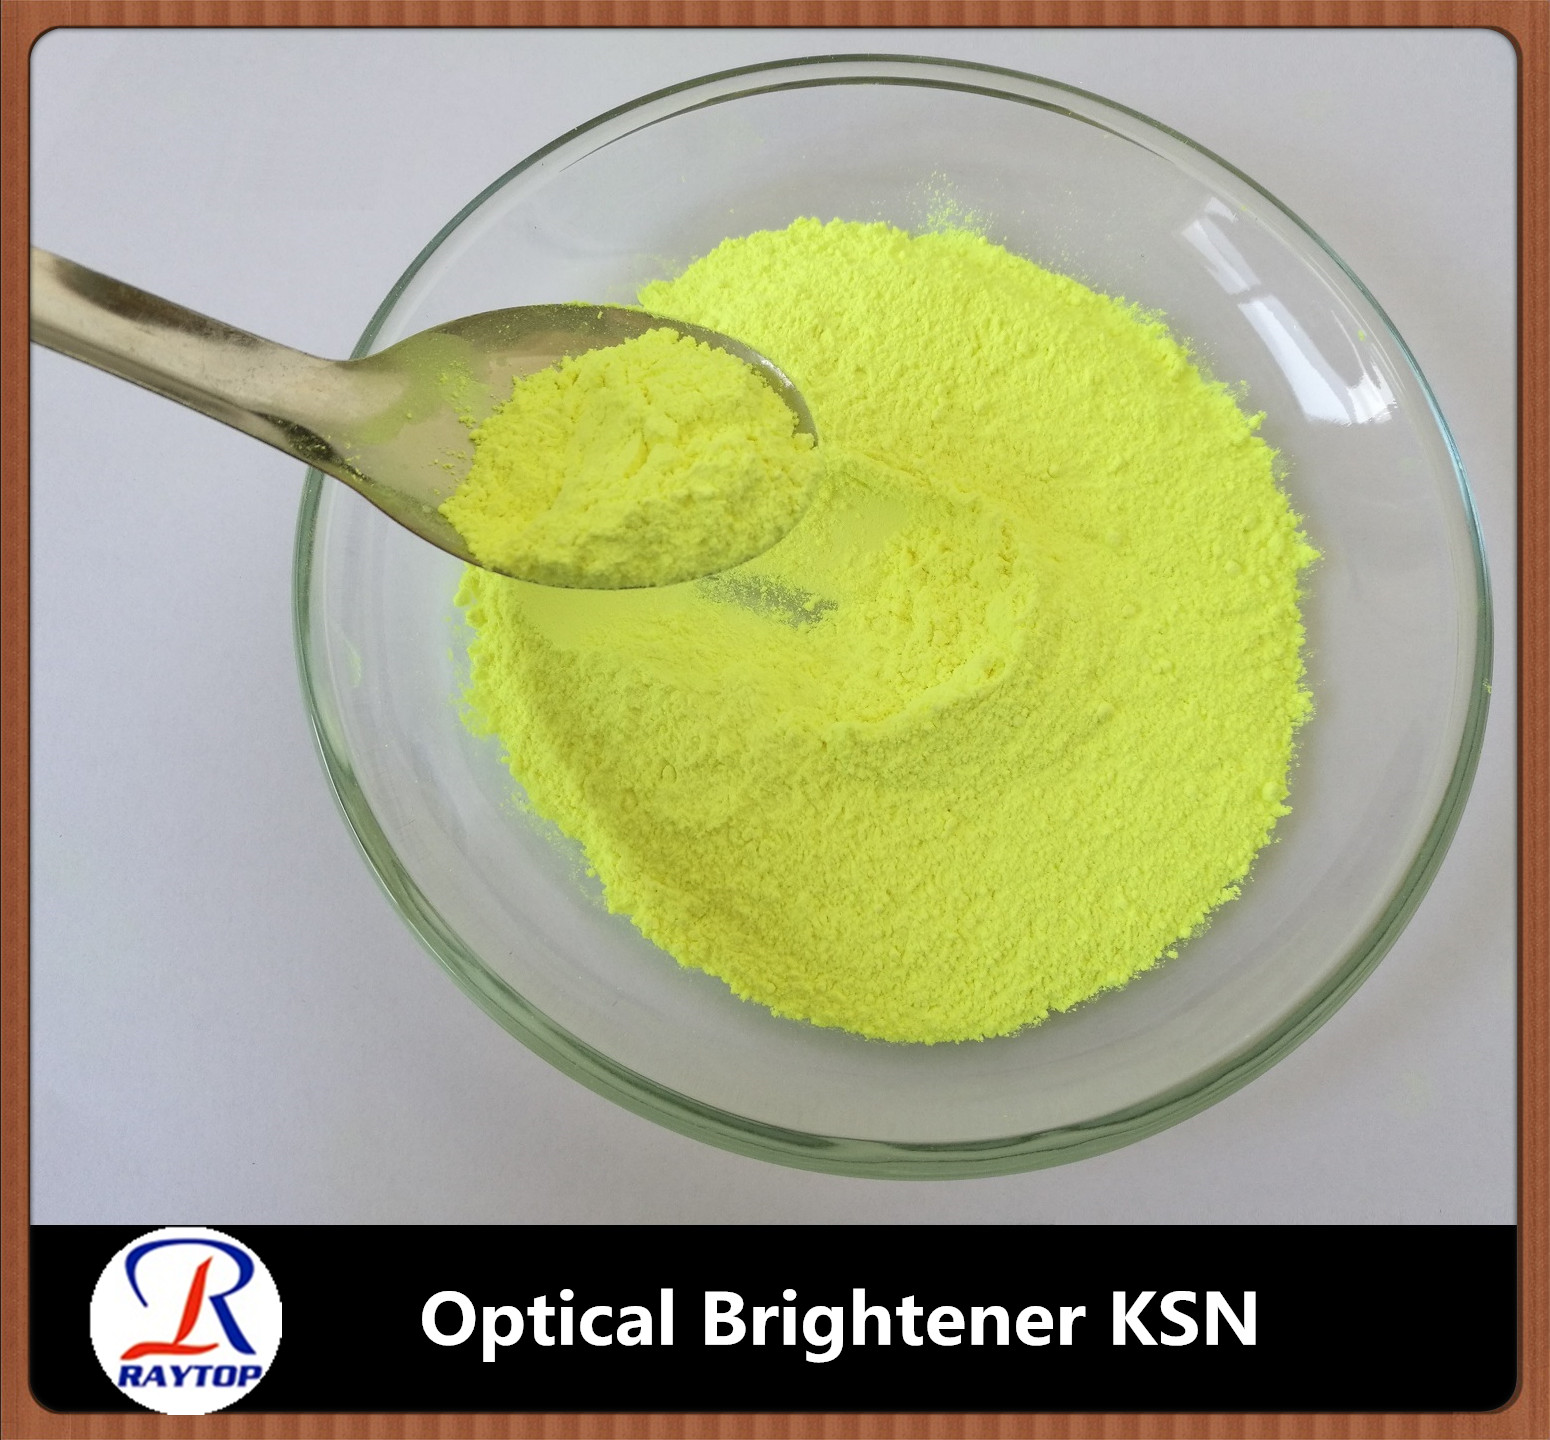 Green yellow powder Optical Brightener KSN 368 manufacturers in india